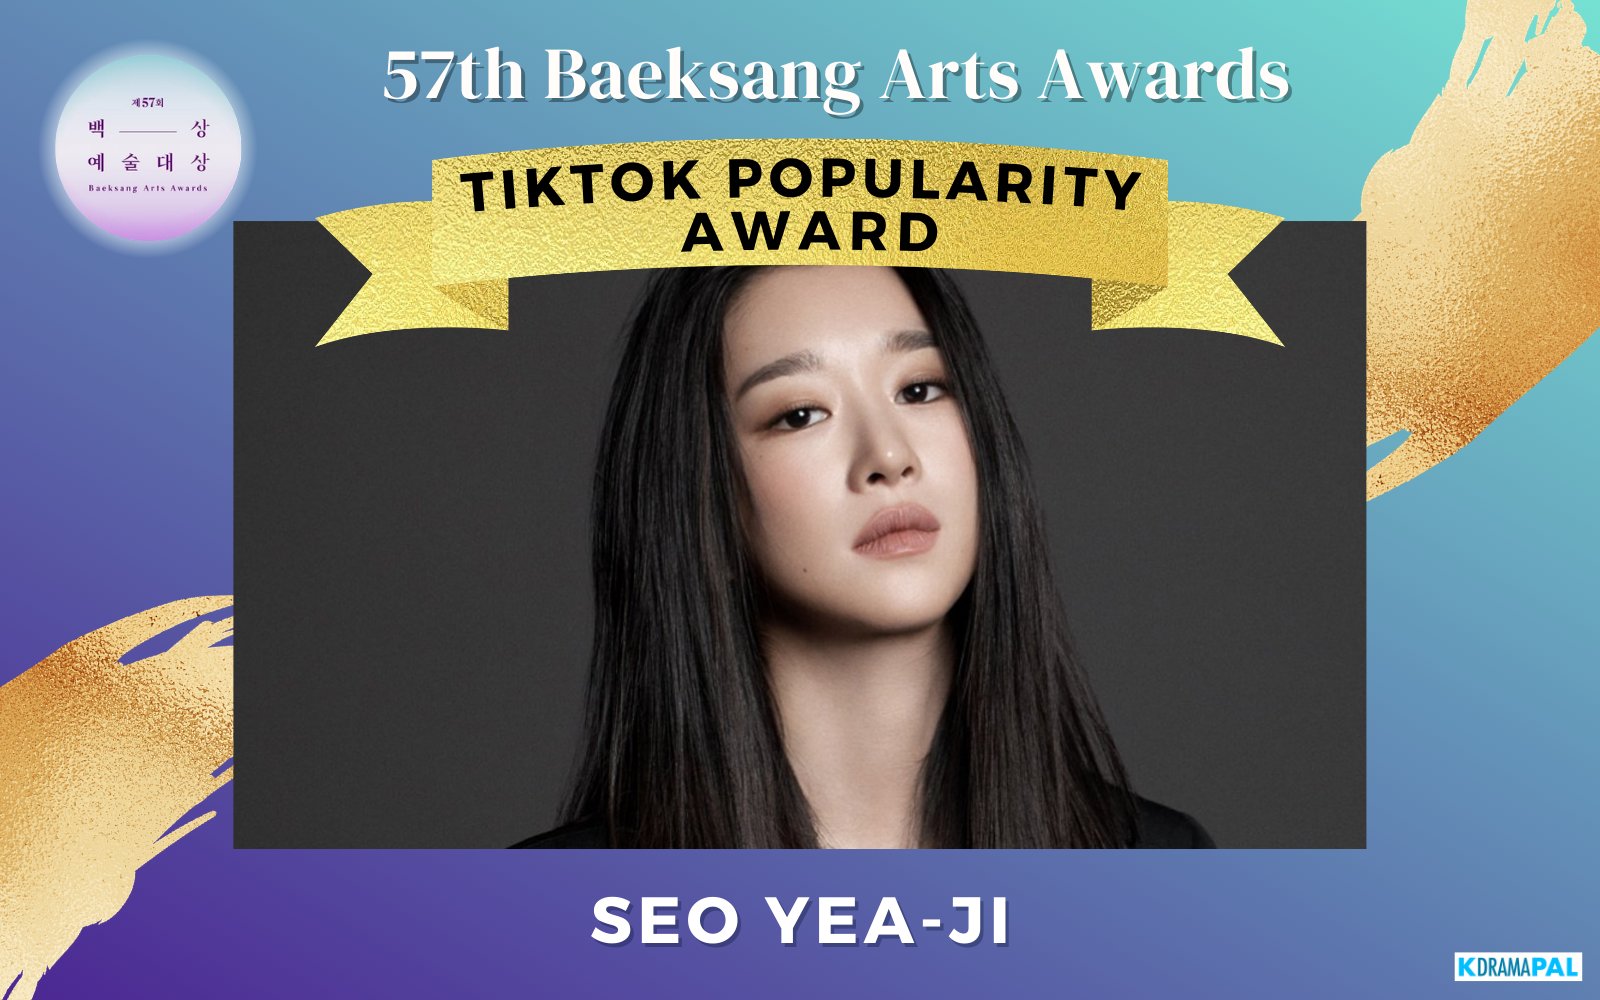 Premio a la popularidad de TikTok de los 57th Baeksang Arts Awards - Seo Yea-ji